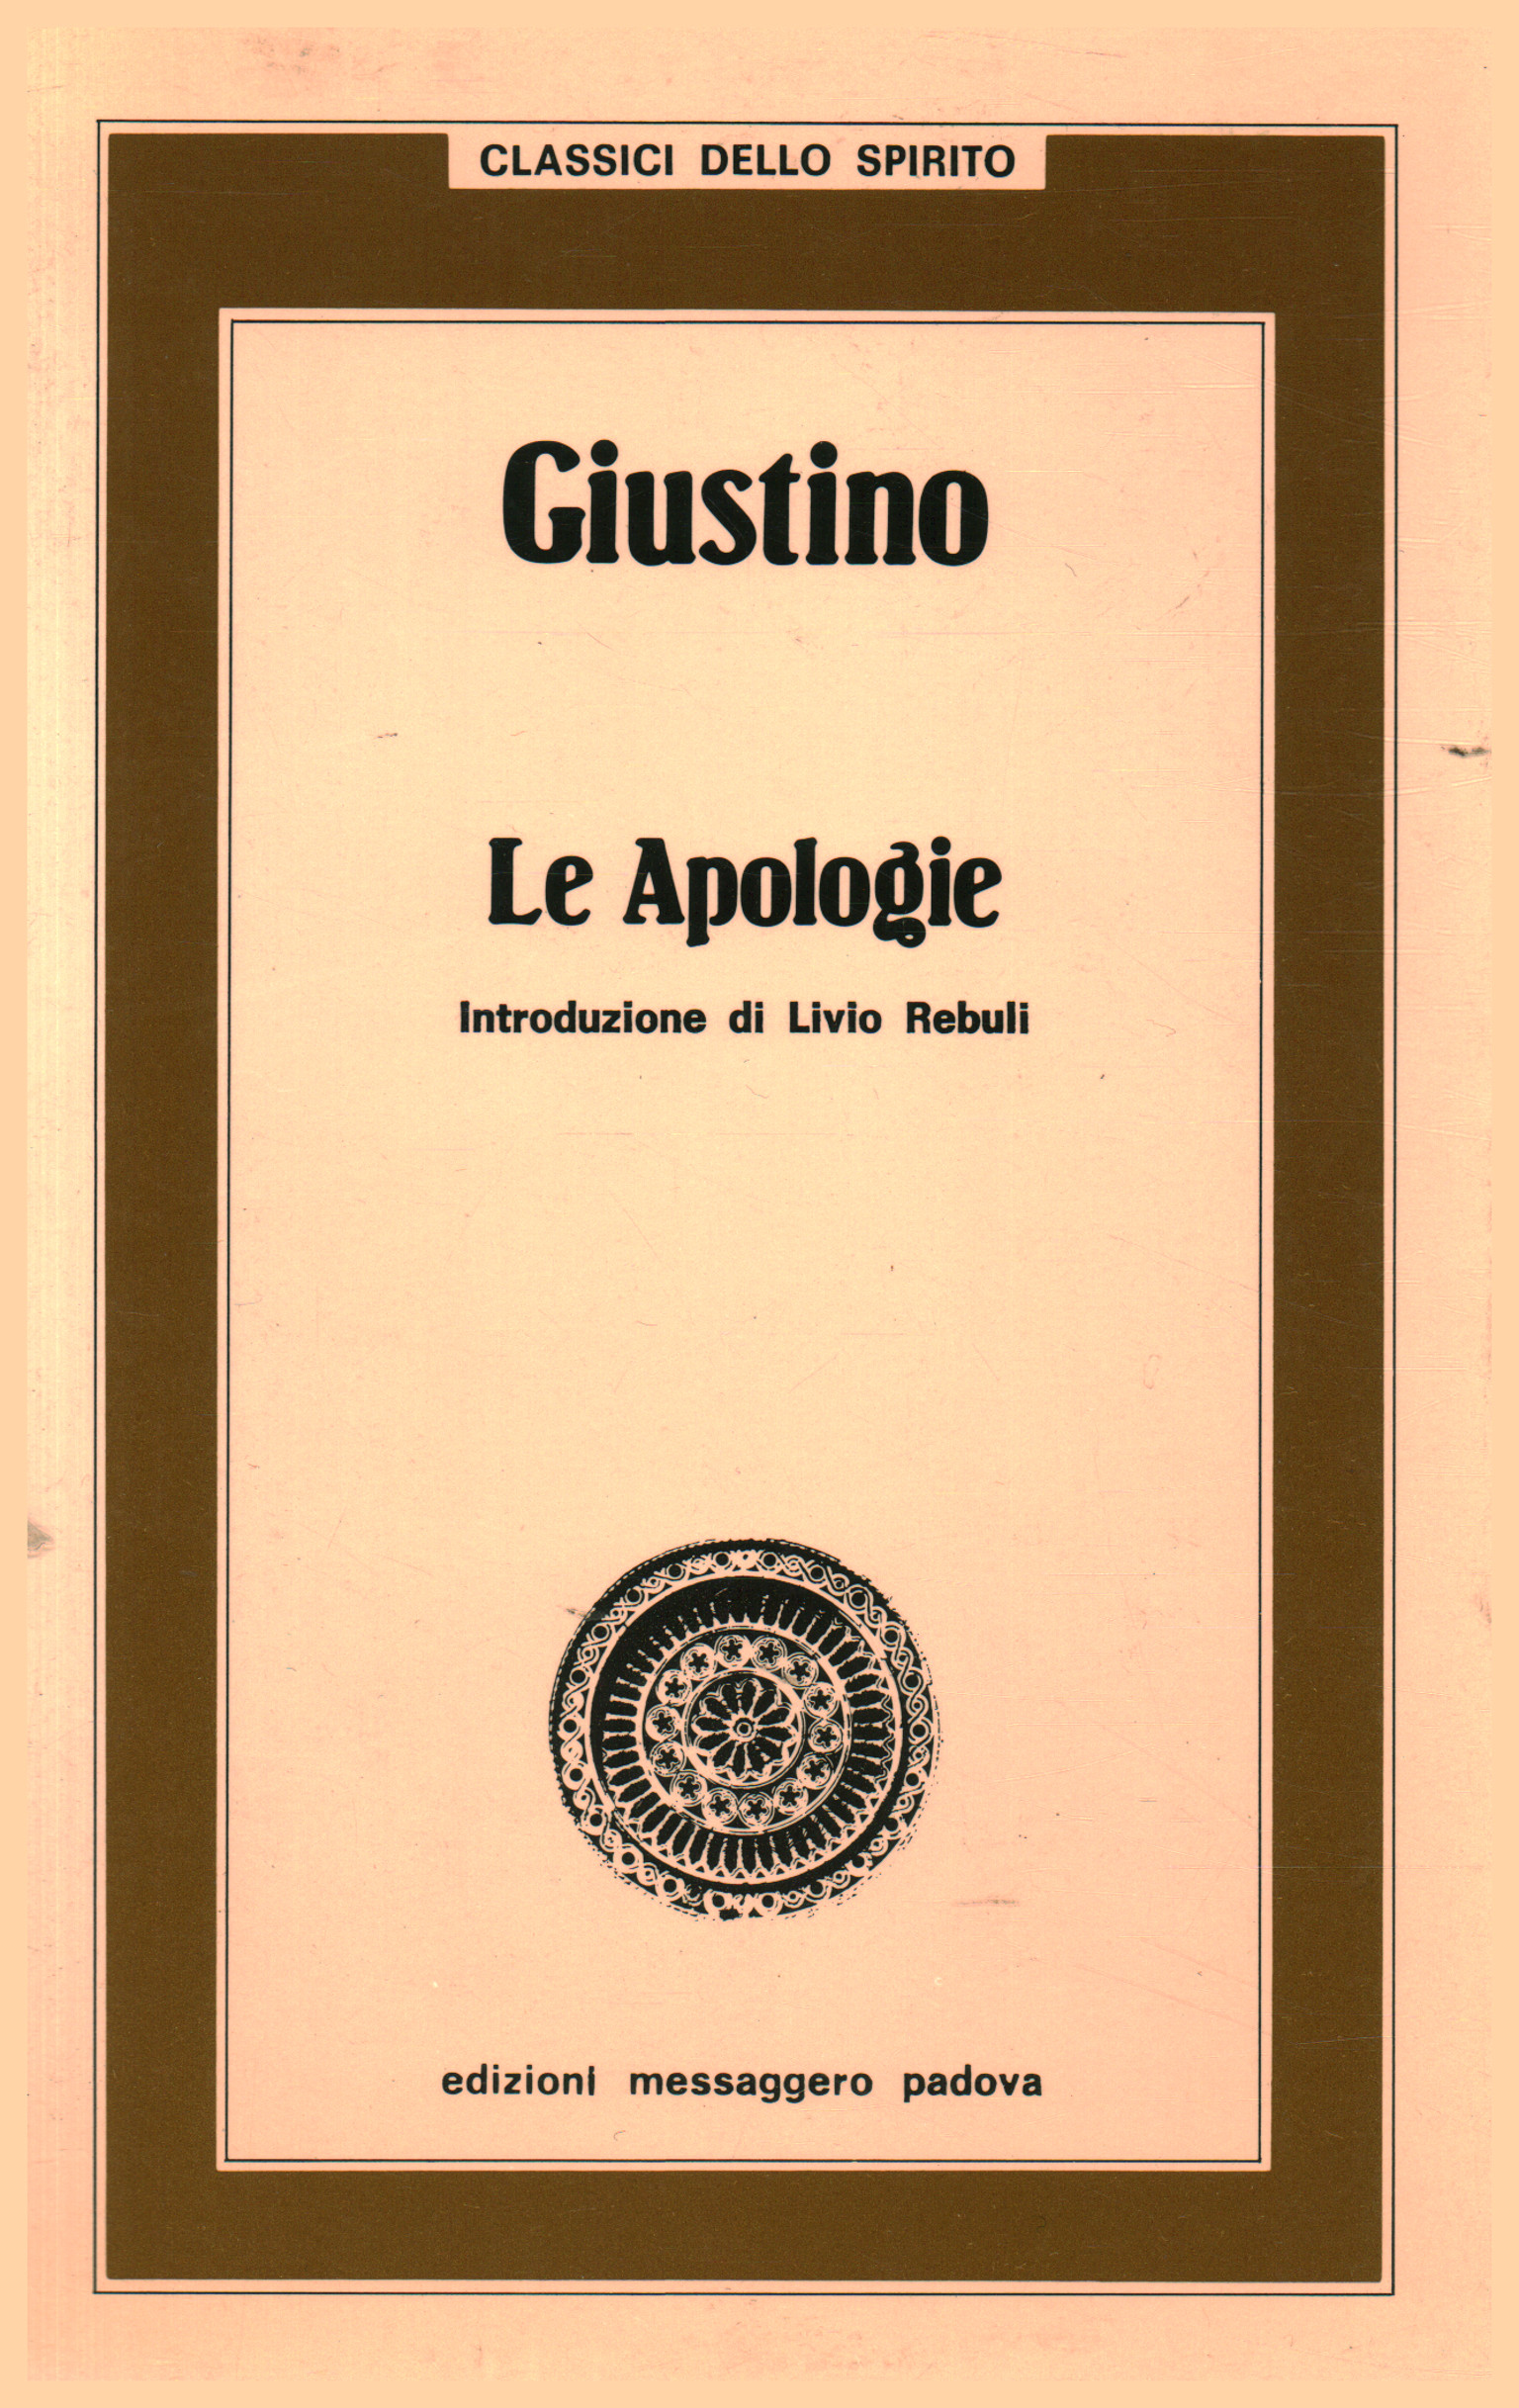 Le Apologie, Giustino